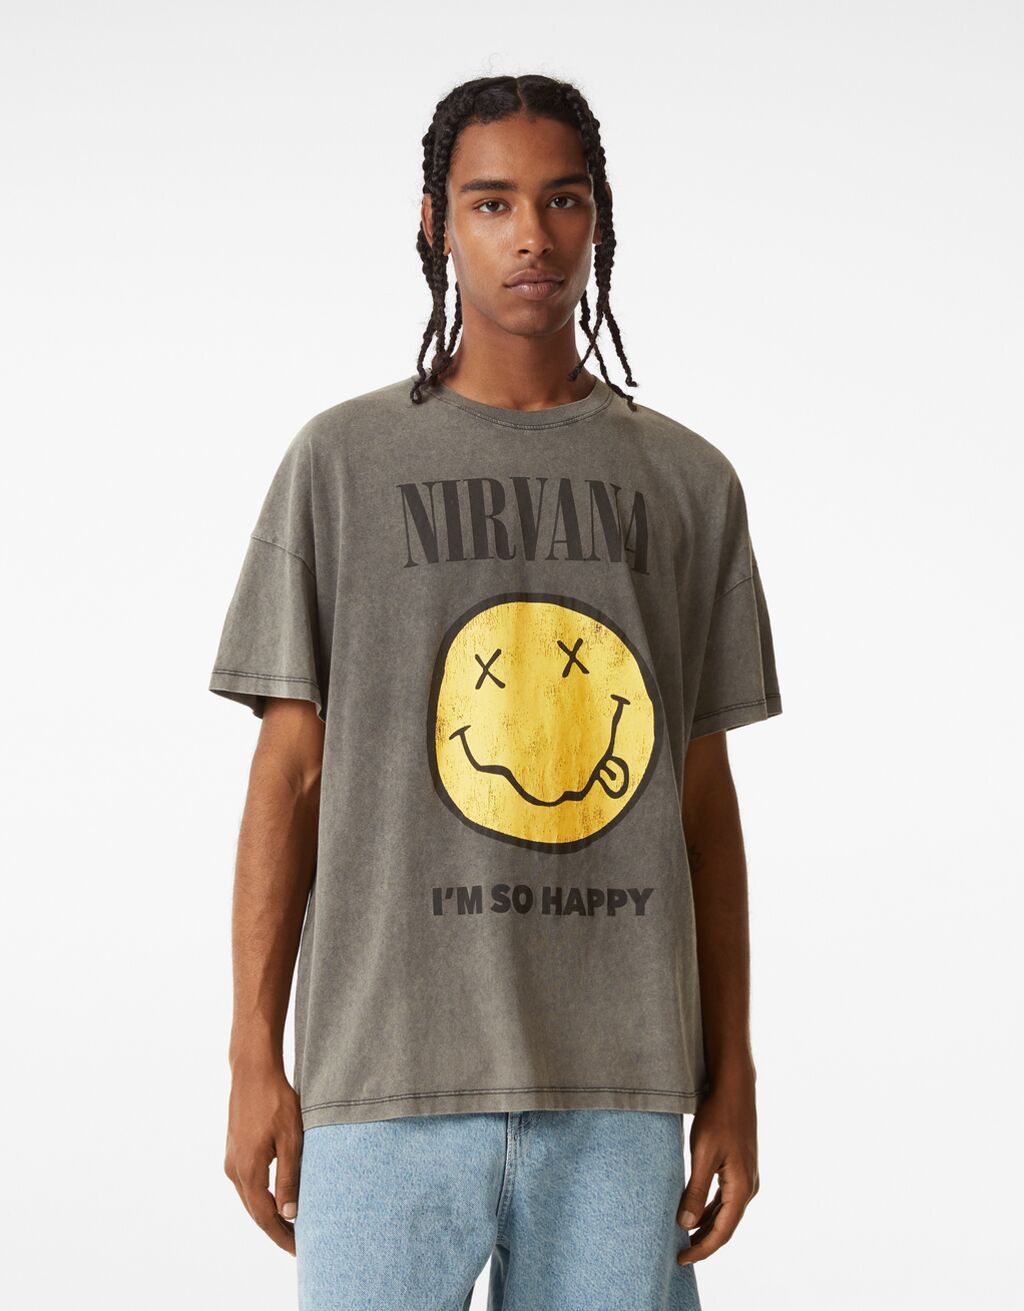 T-shirt manga curta Nirvana estampado happy face